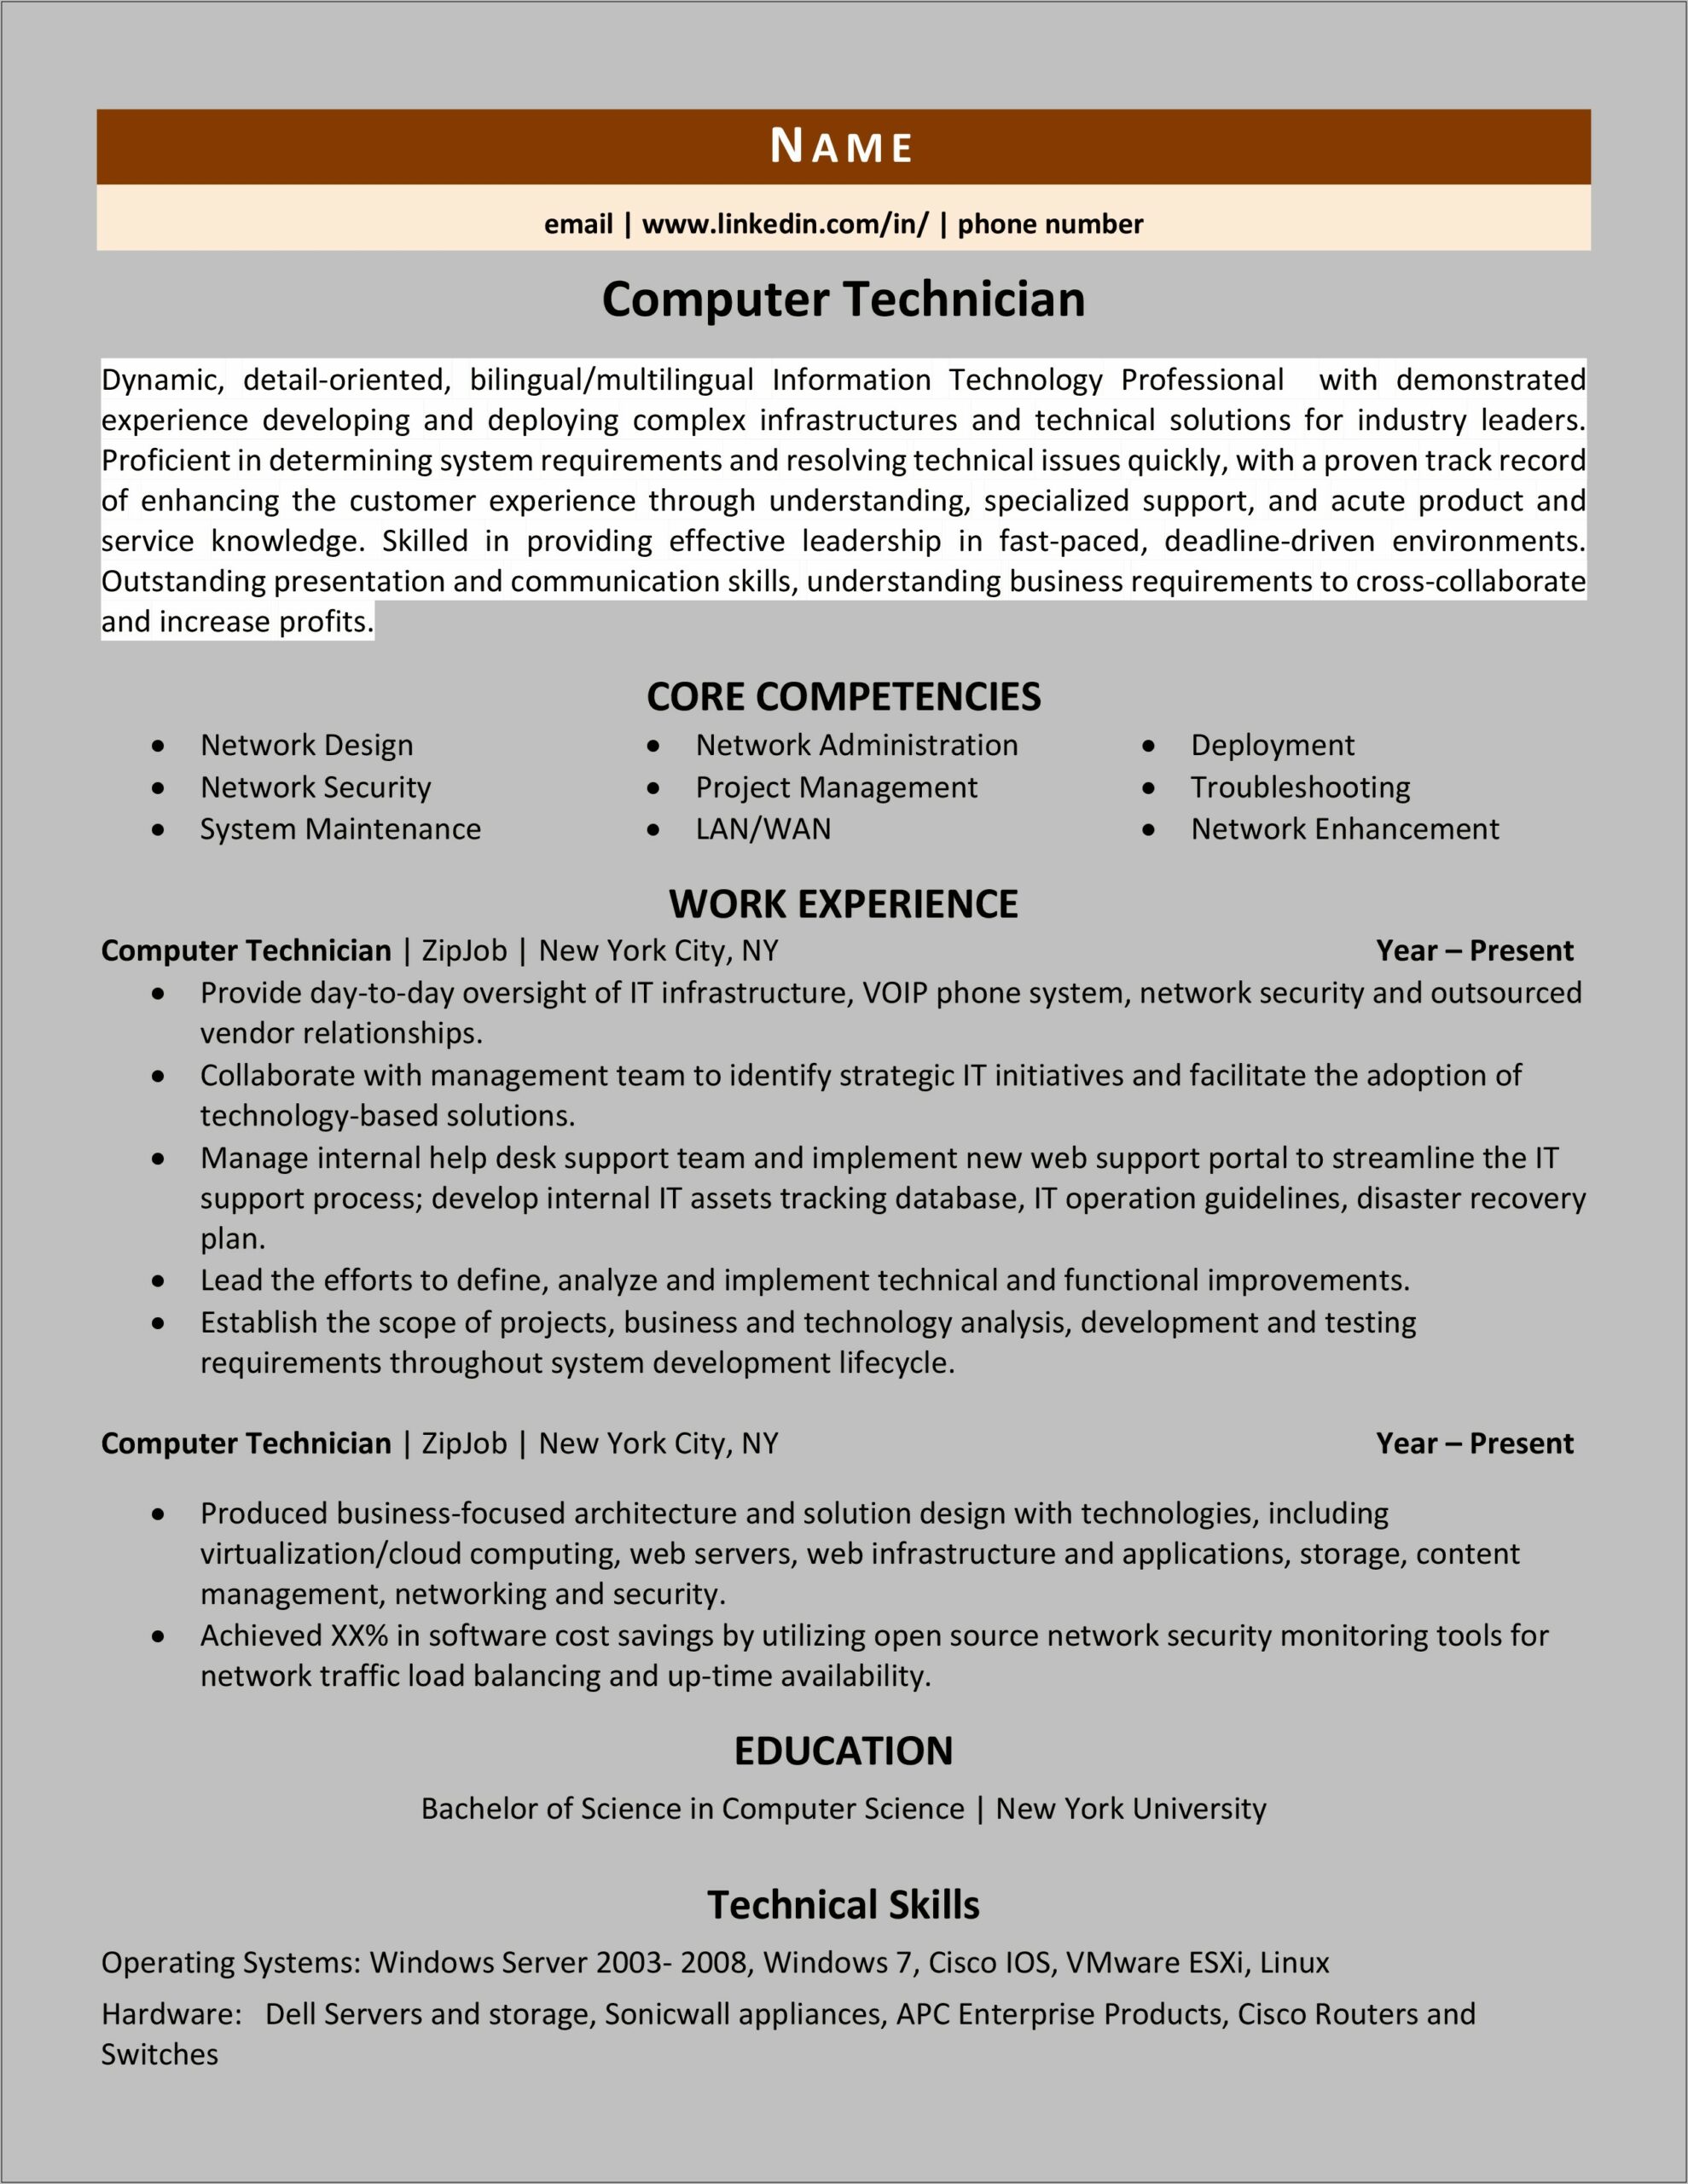 Resume For Computer Technician Job